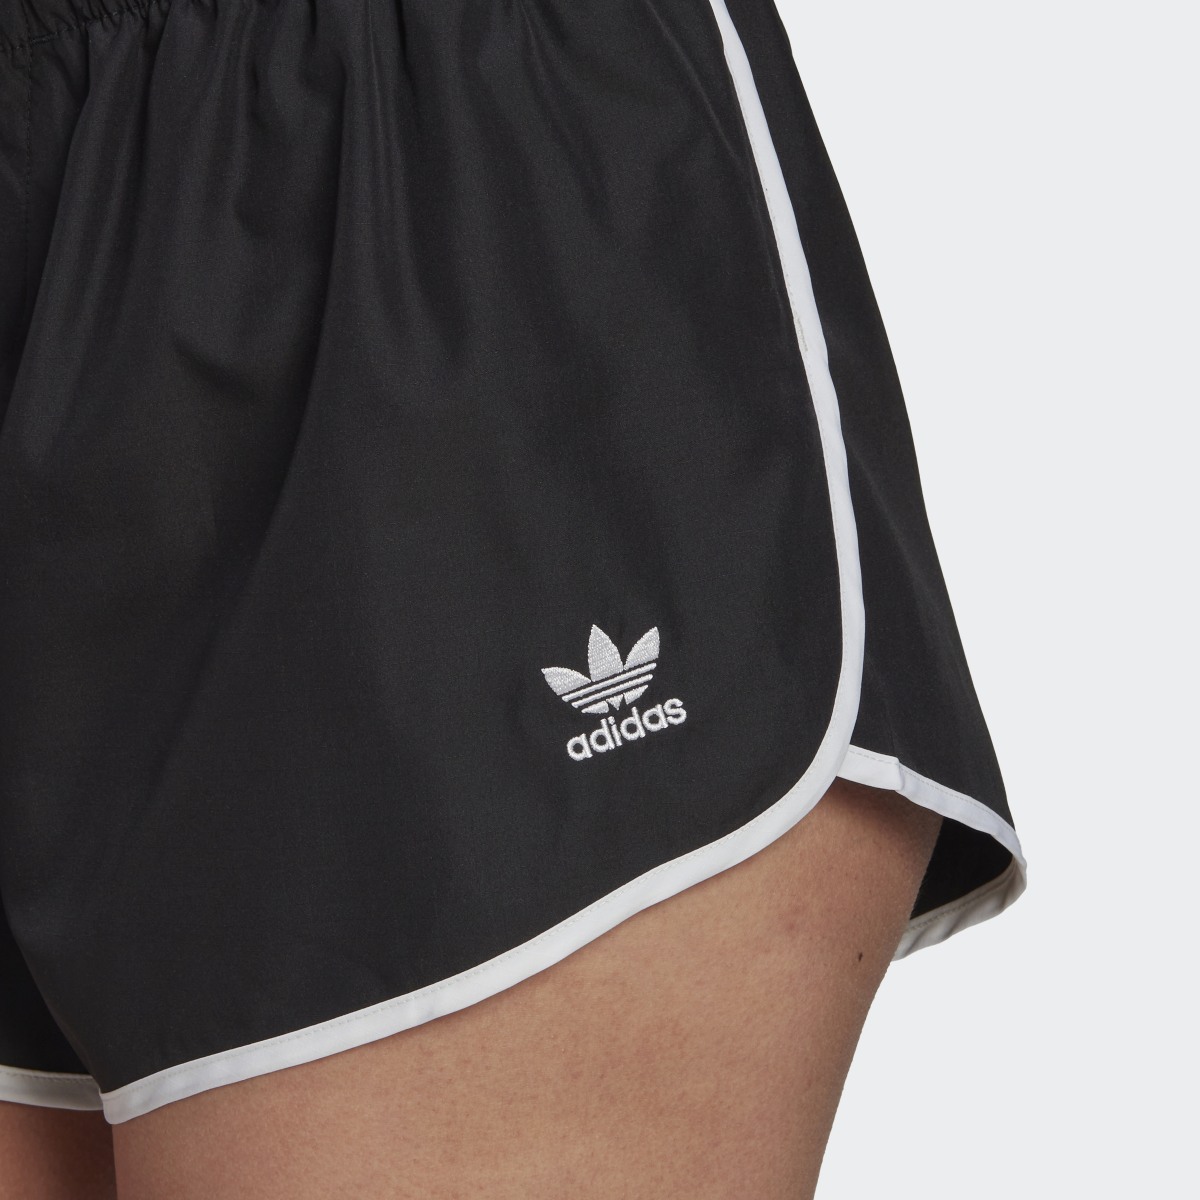 Adidas Always Original Laced Shorts. 5